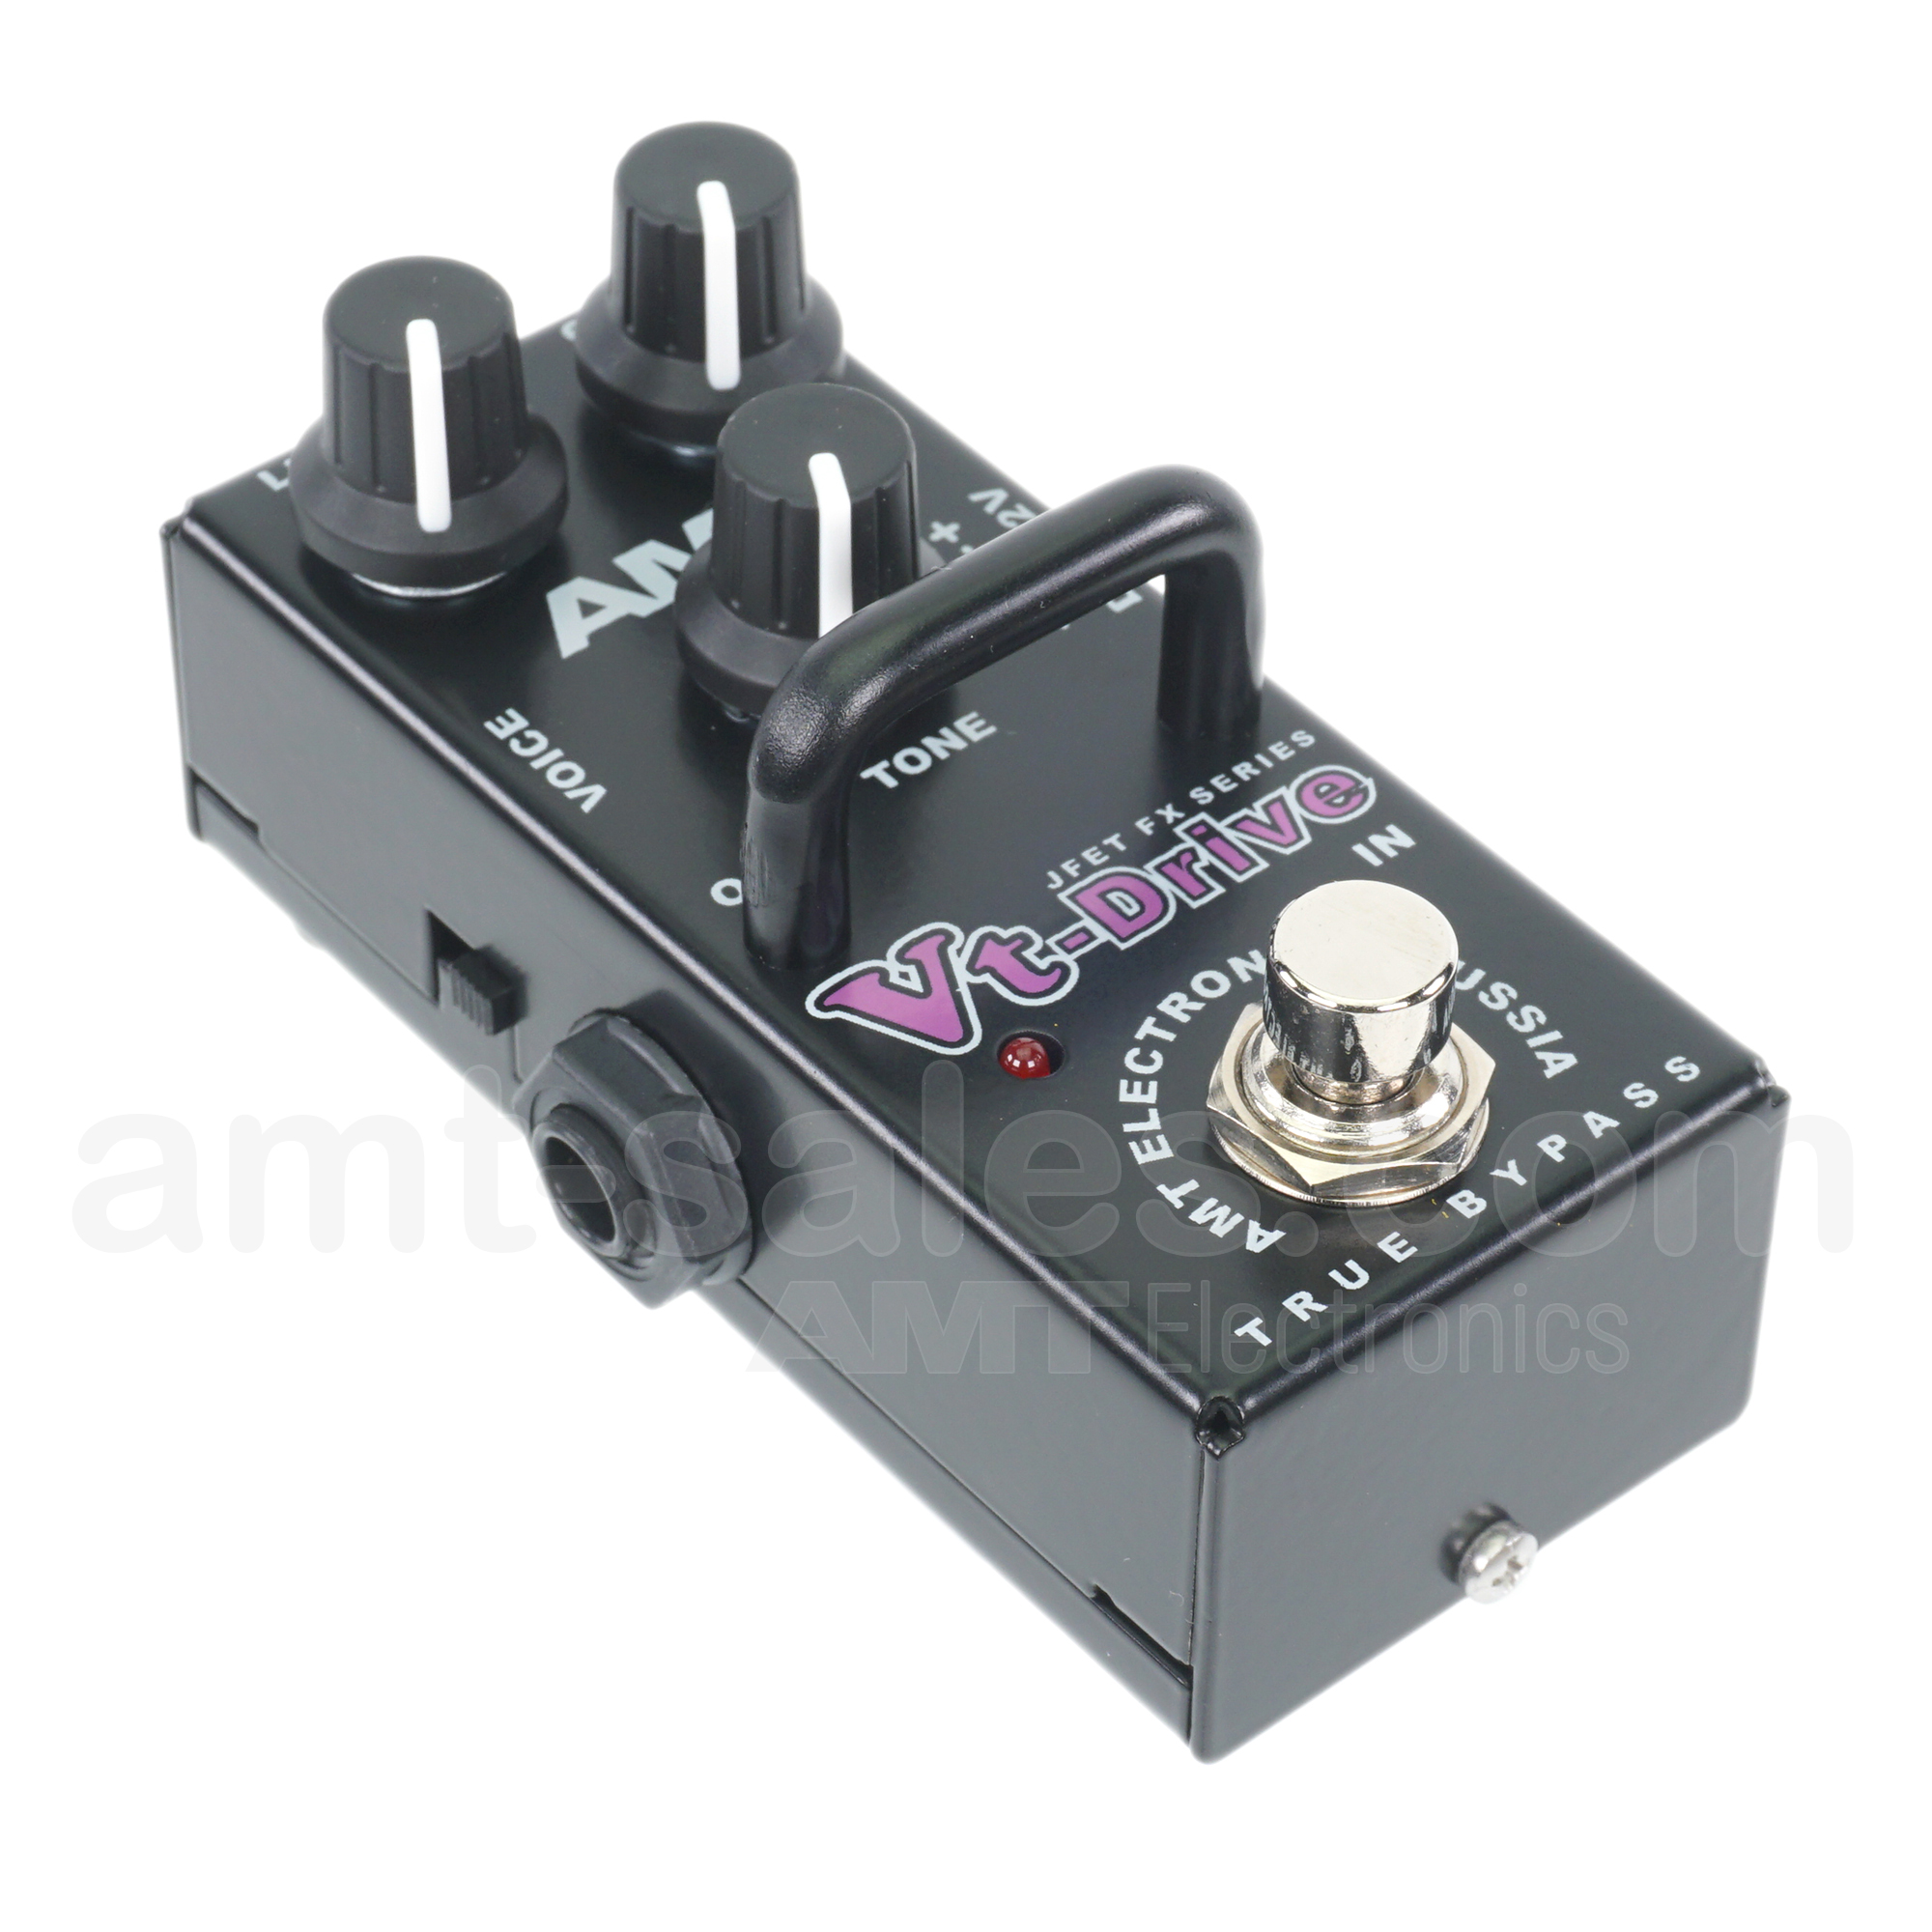 AMT Vt-Drive mini - JFET distortion pedal